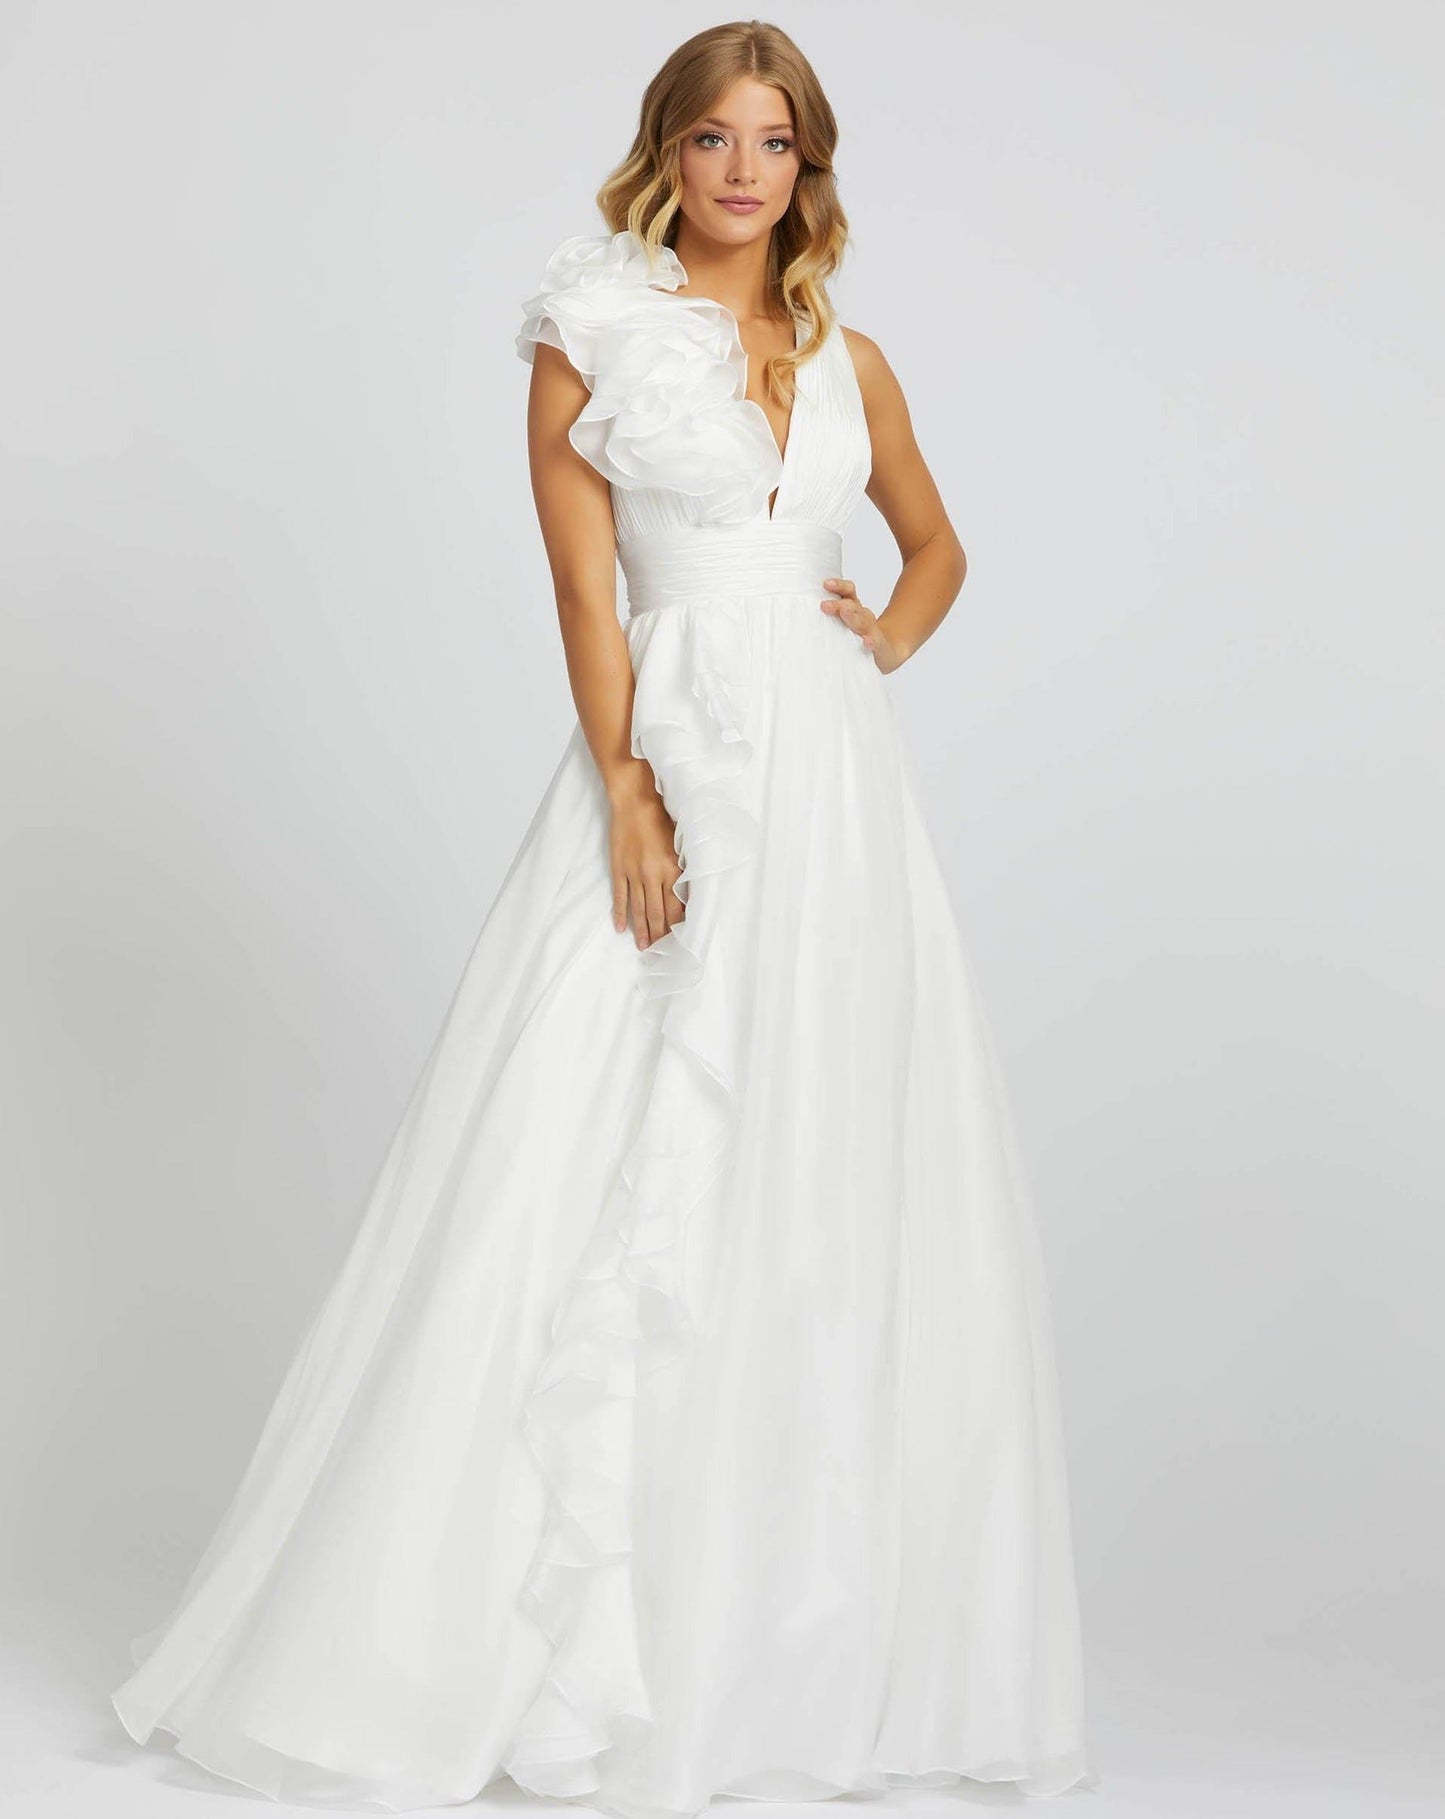 Formal Dresses Prom Long Ruffled Ball Gown White